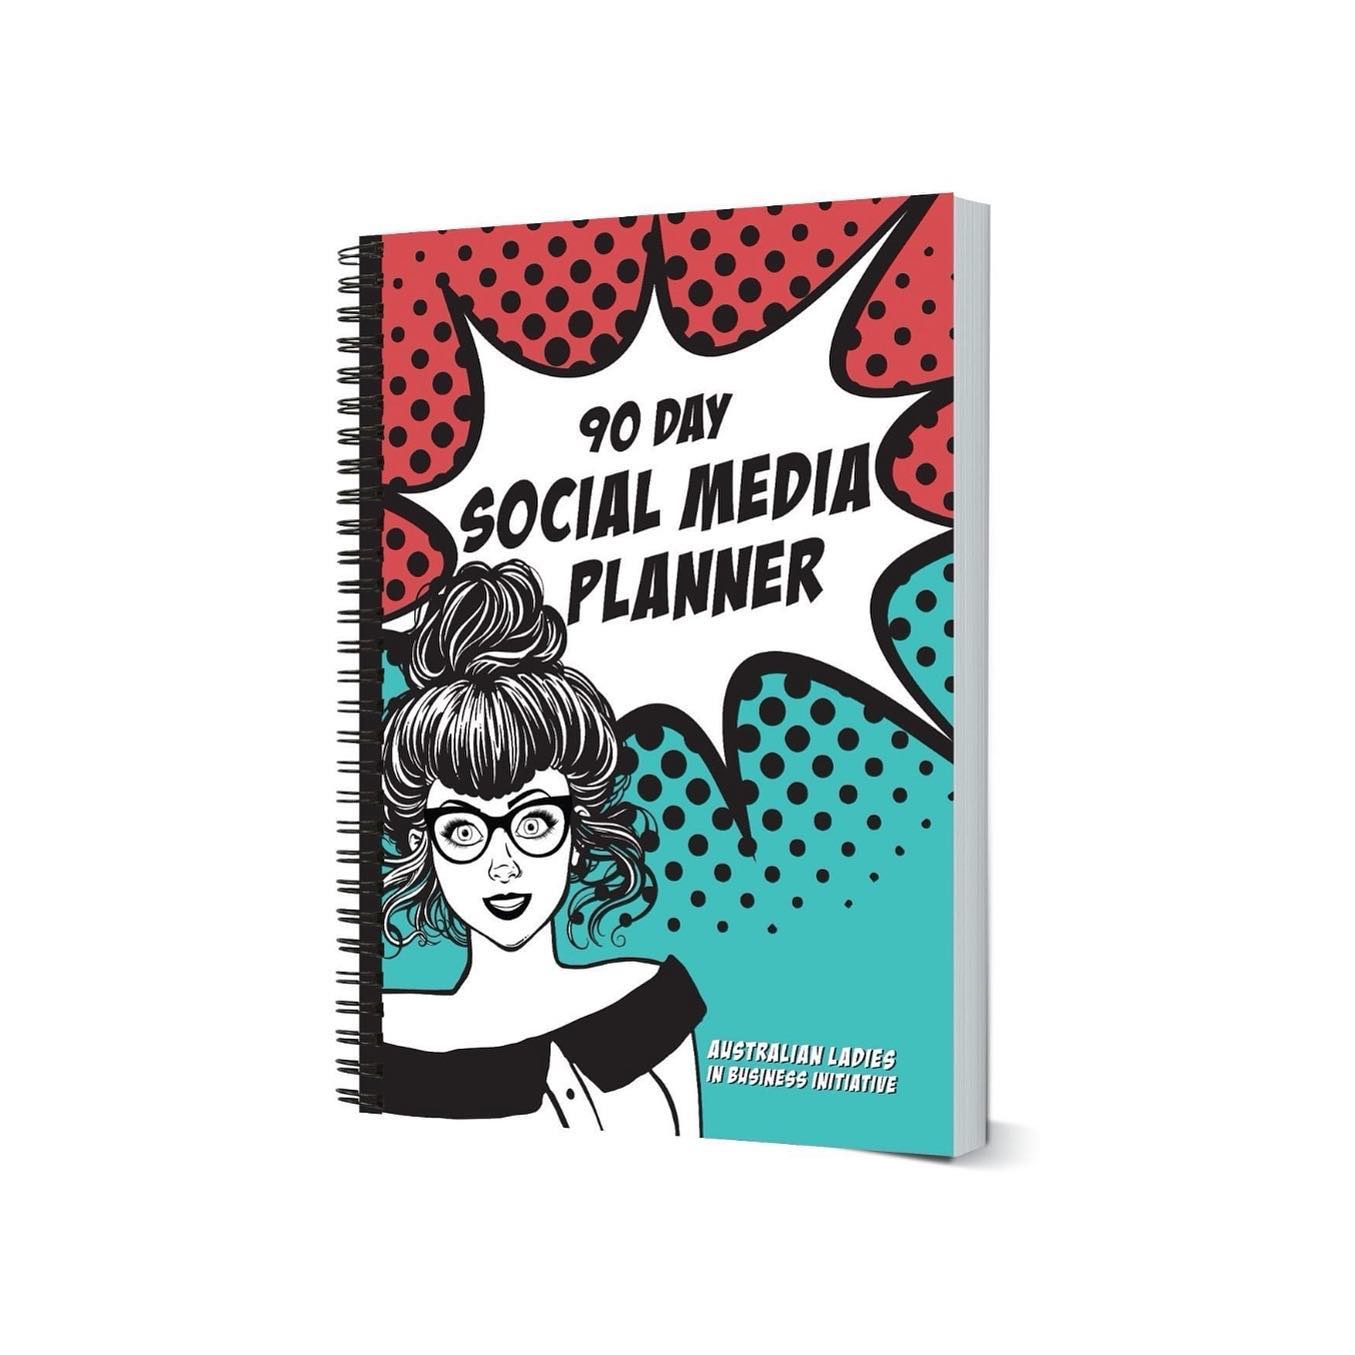 Social Media Planner physical copy